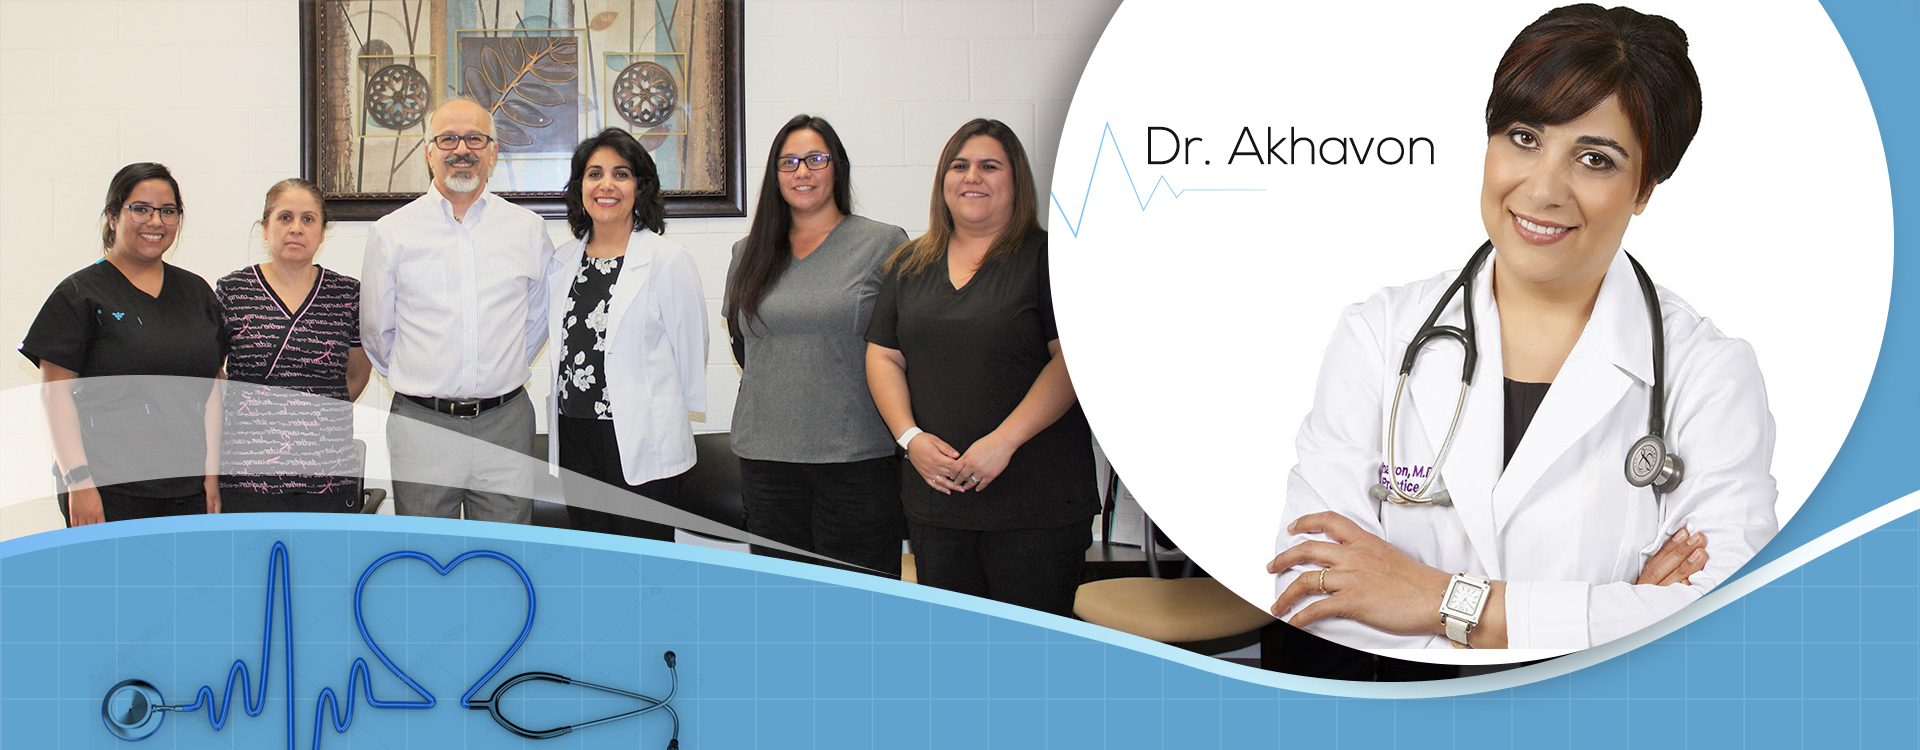 Dr. Akhavon & Team Visalia Family Health